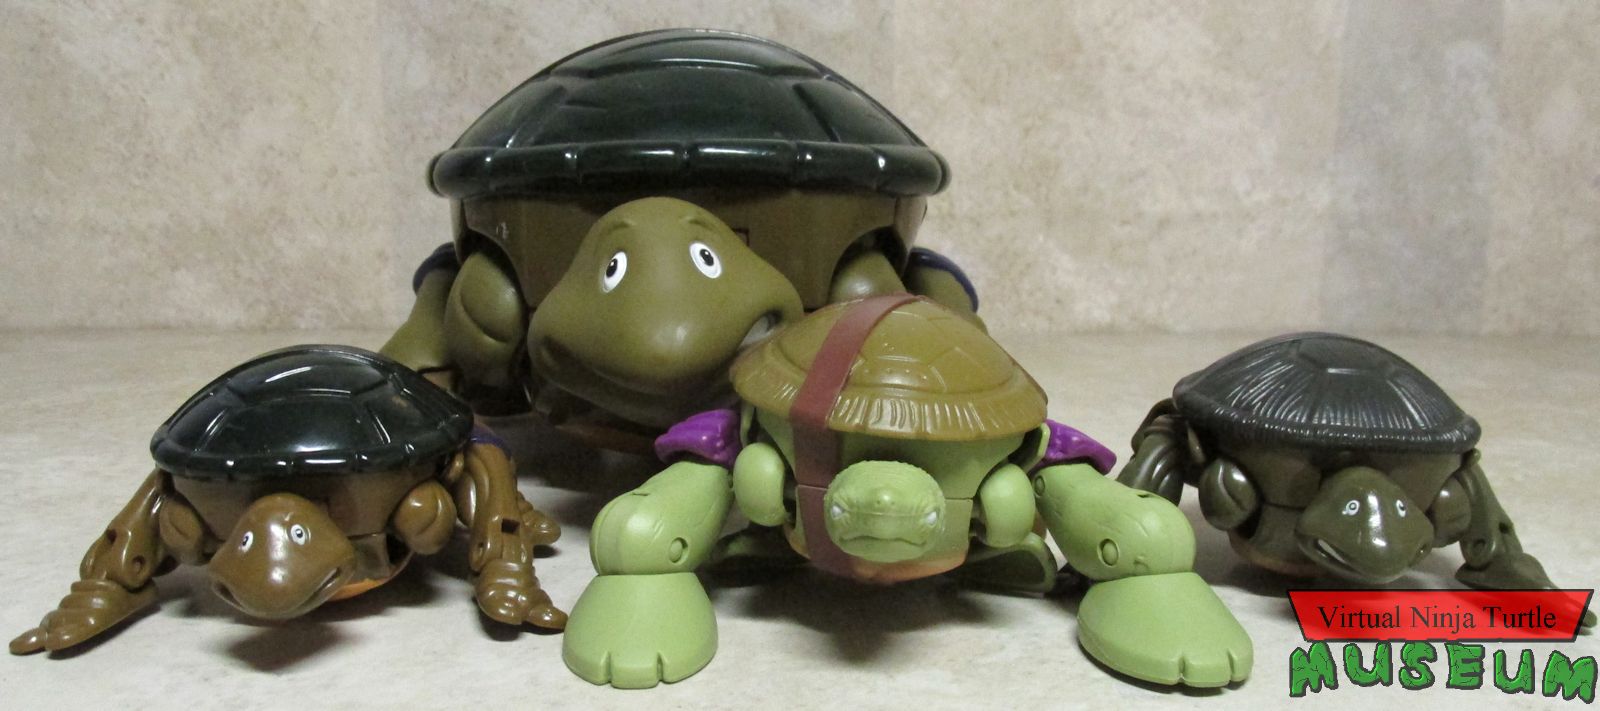 Mutating Donatellos turtle forms